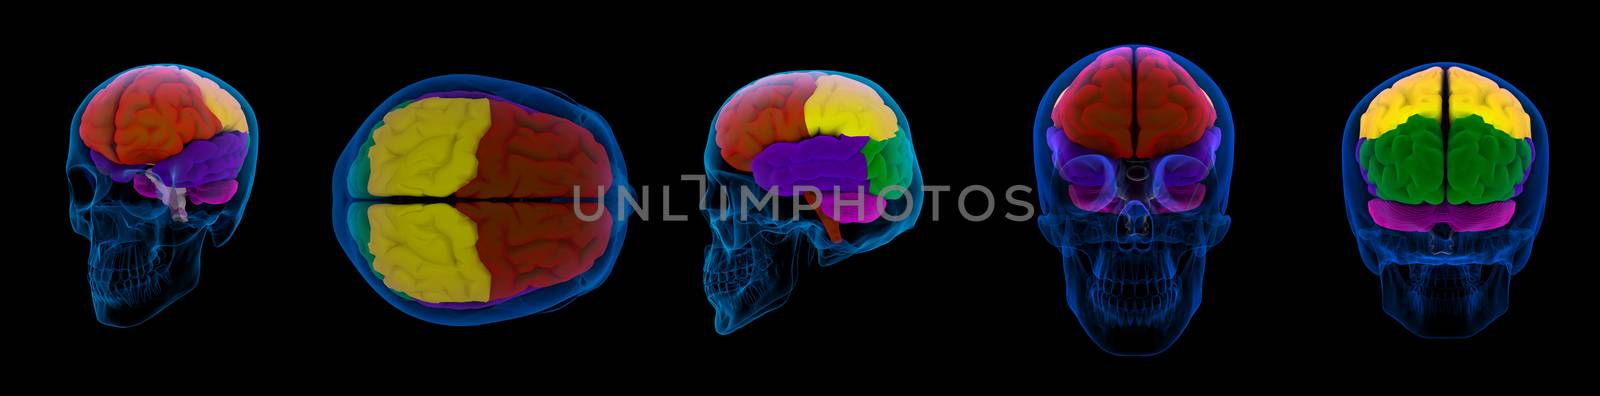 3d render illustration  of a  human brain